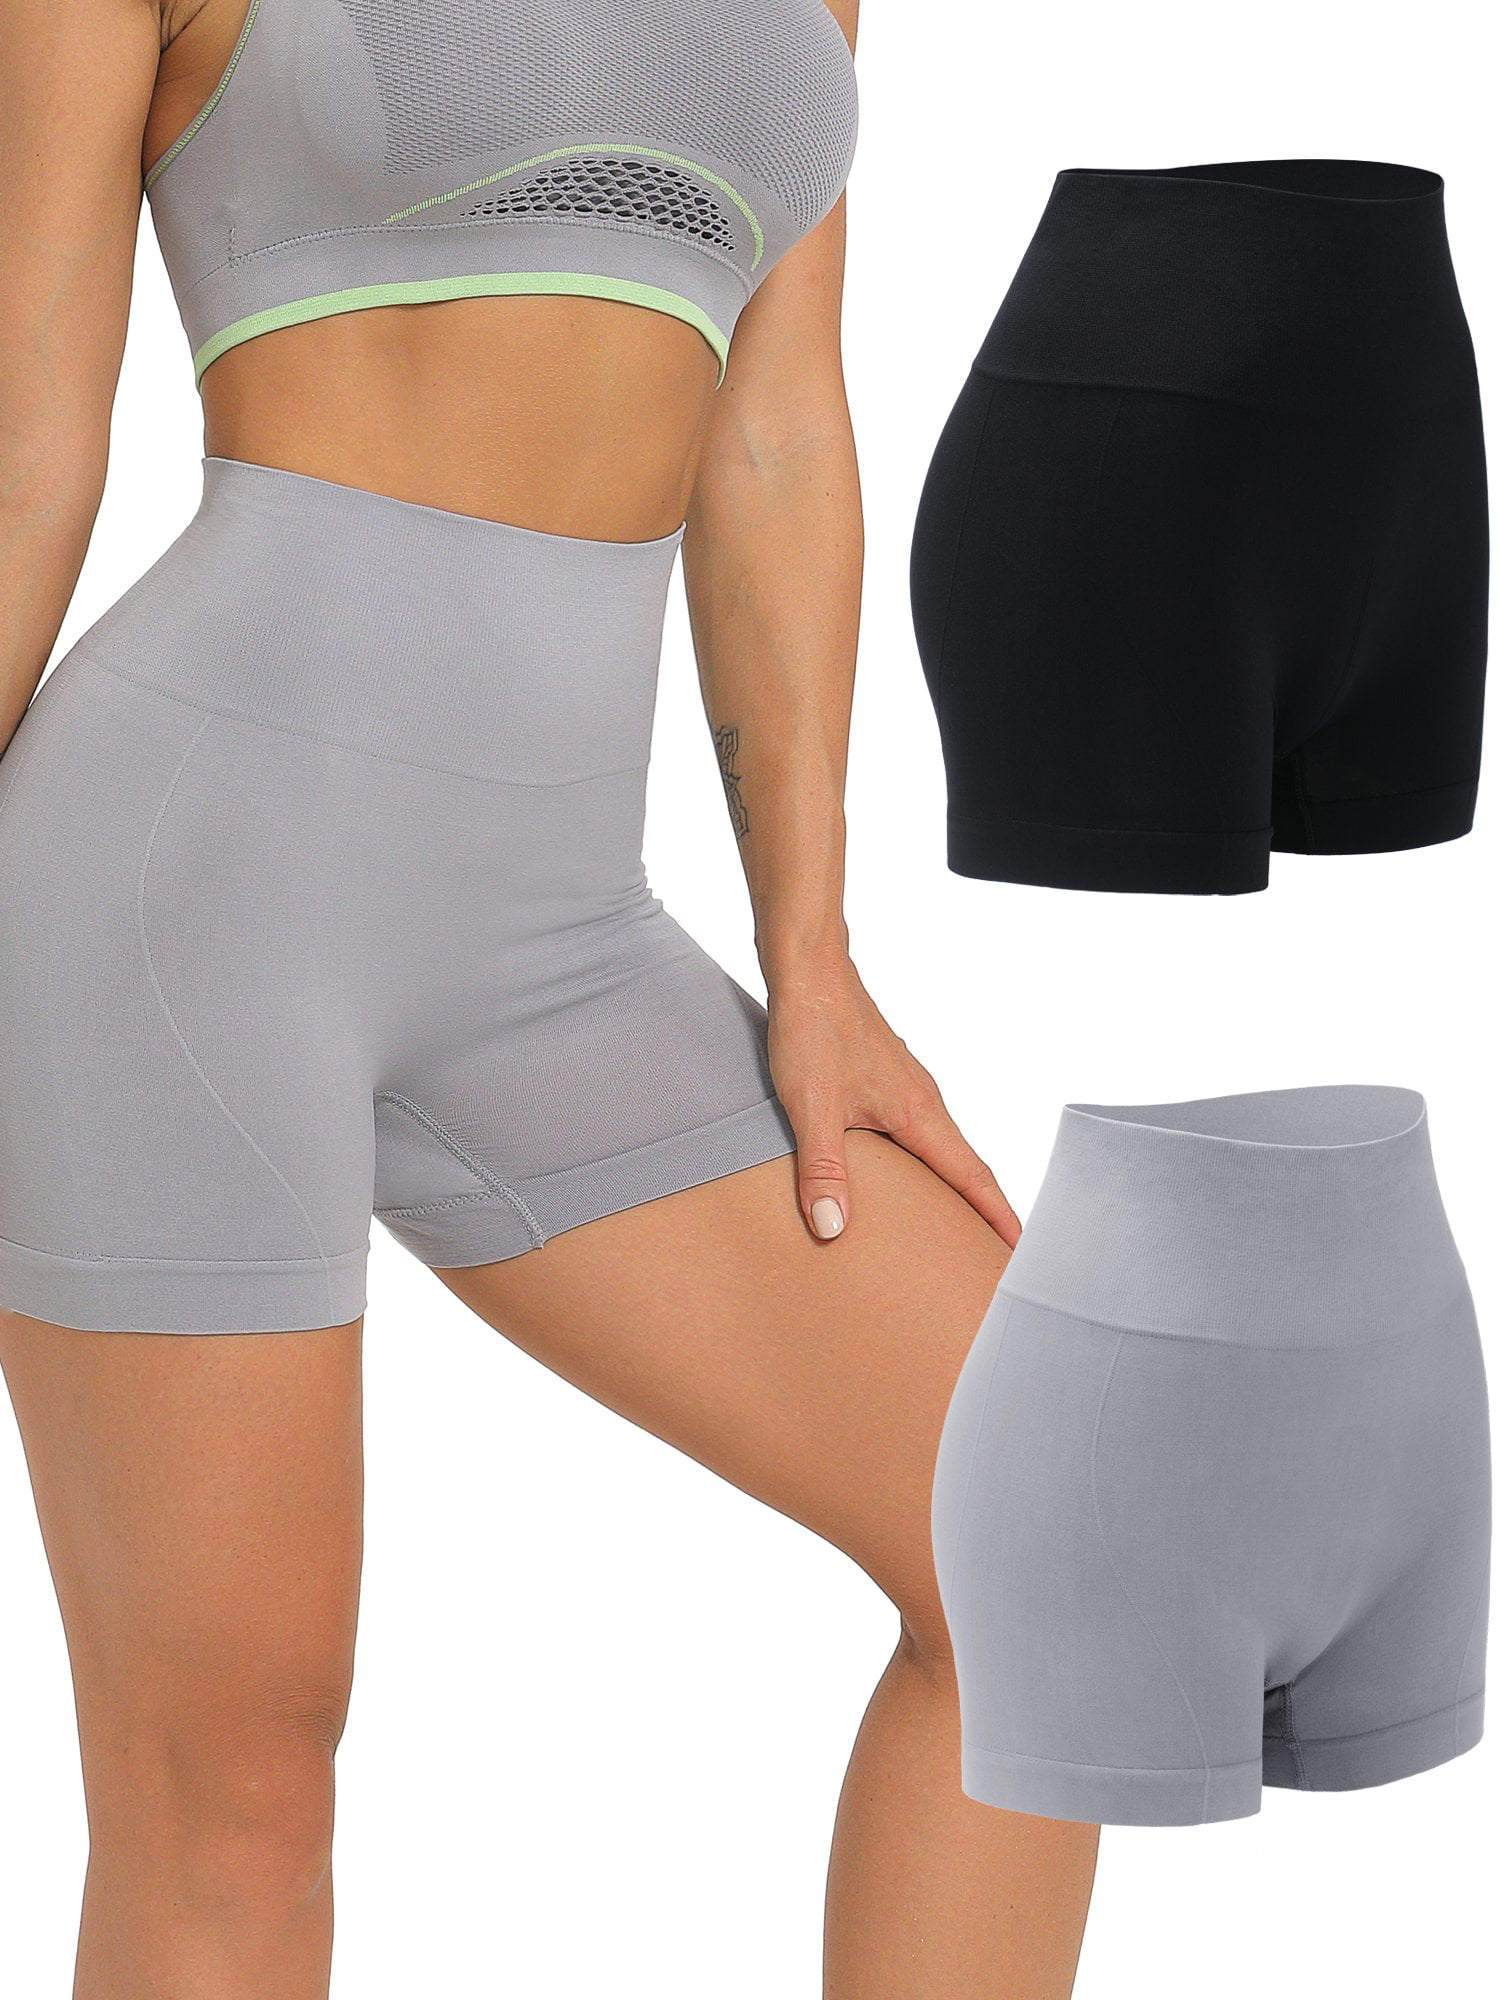 GROTEEN 2 Pack Biker Shorts for Women High Waist 8 Tummy Control Womens Shorts for Summer Workout Yoga Running 